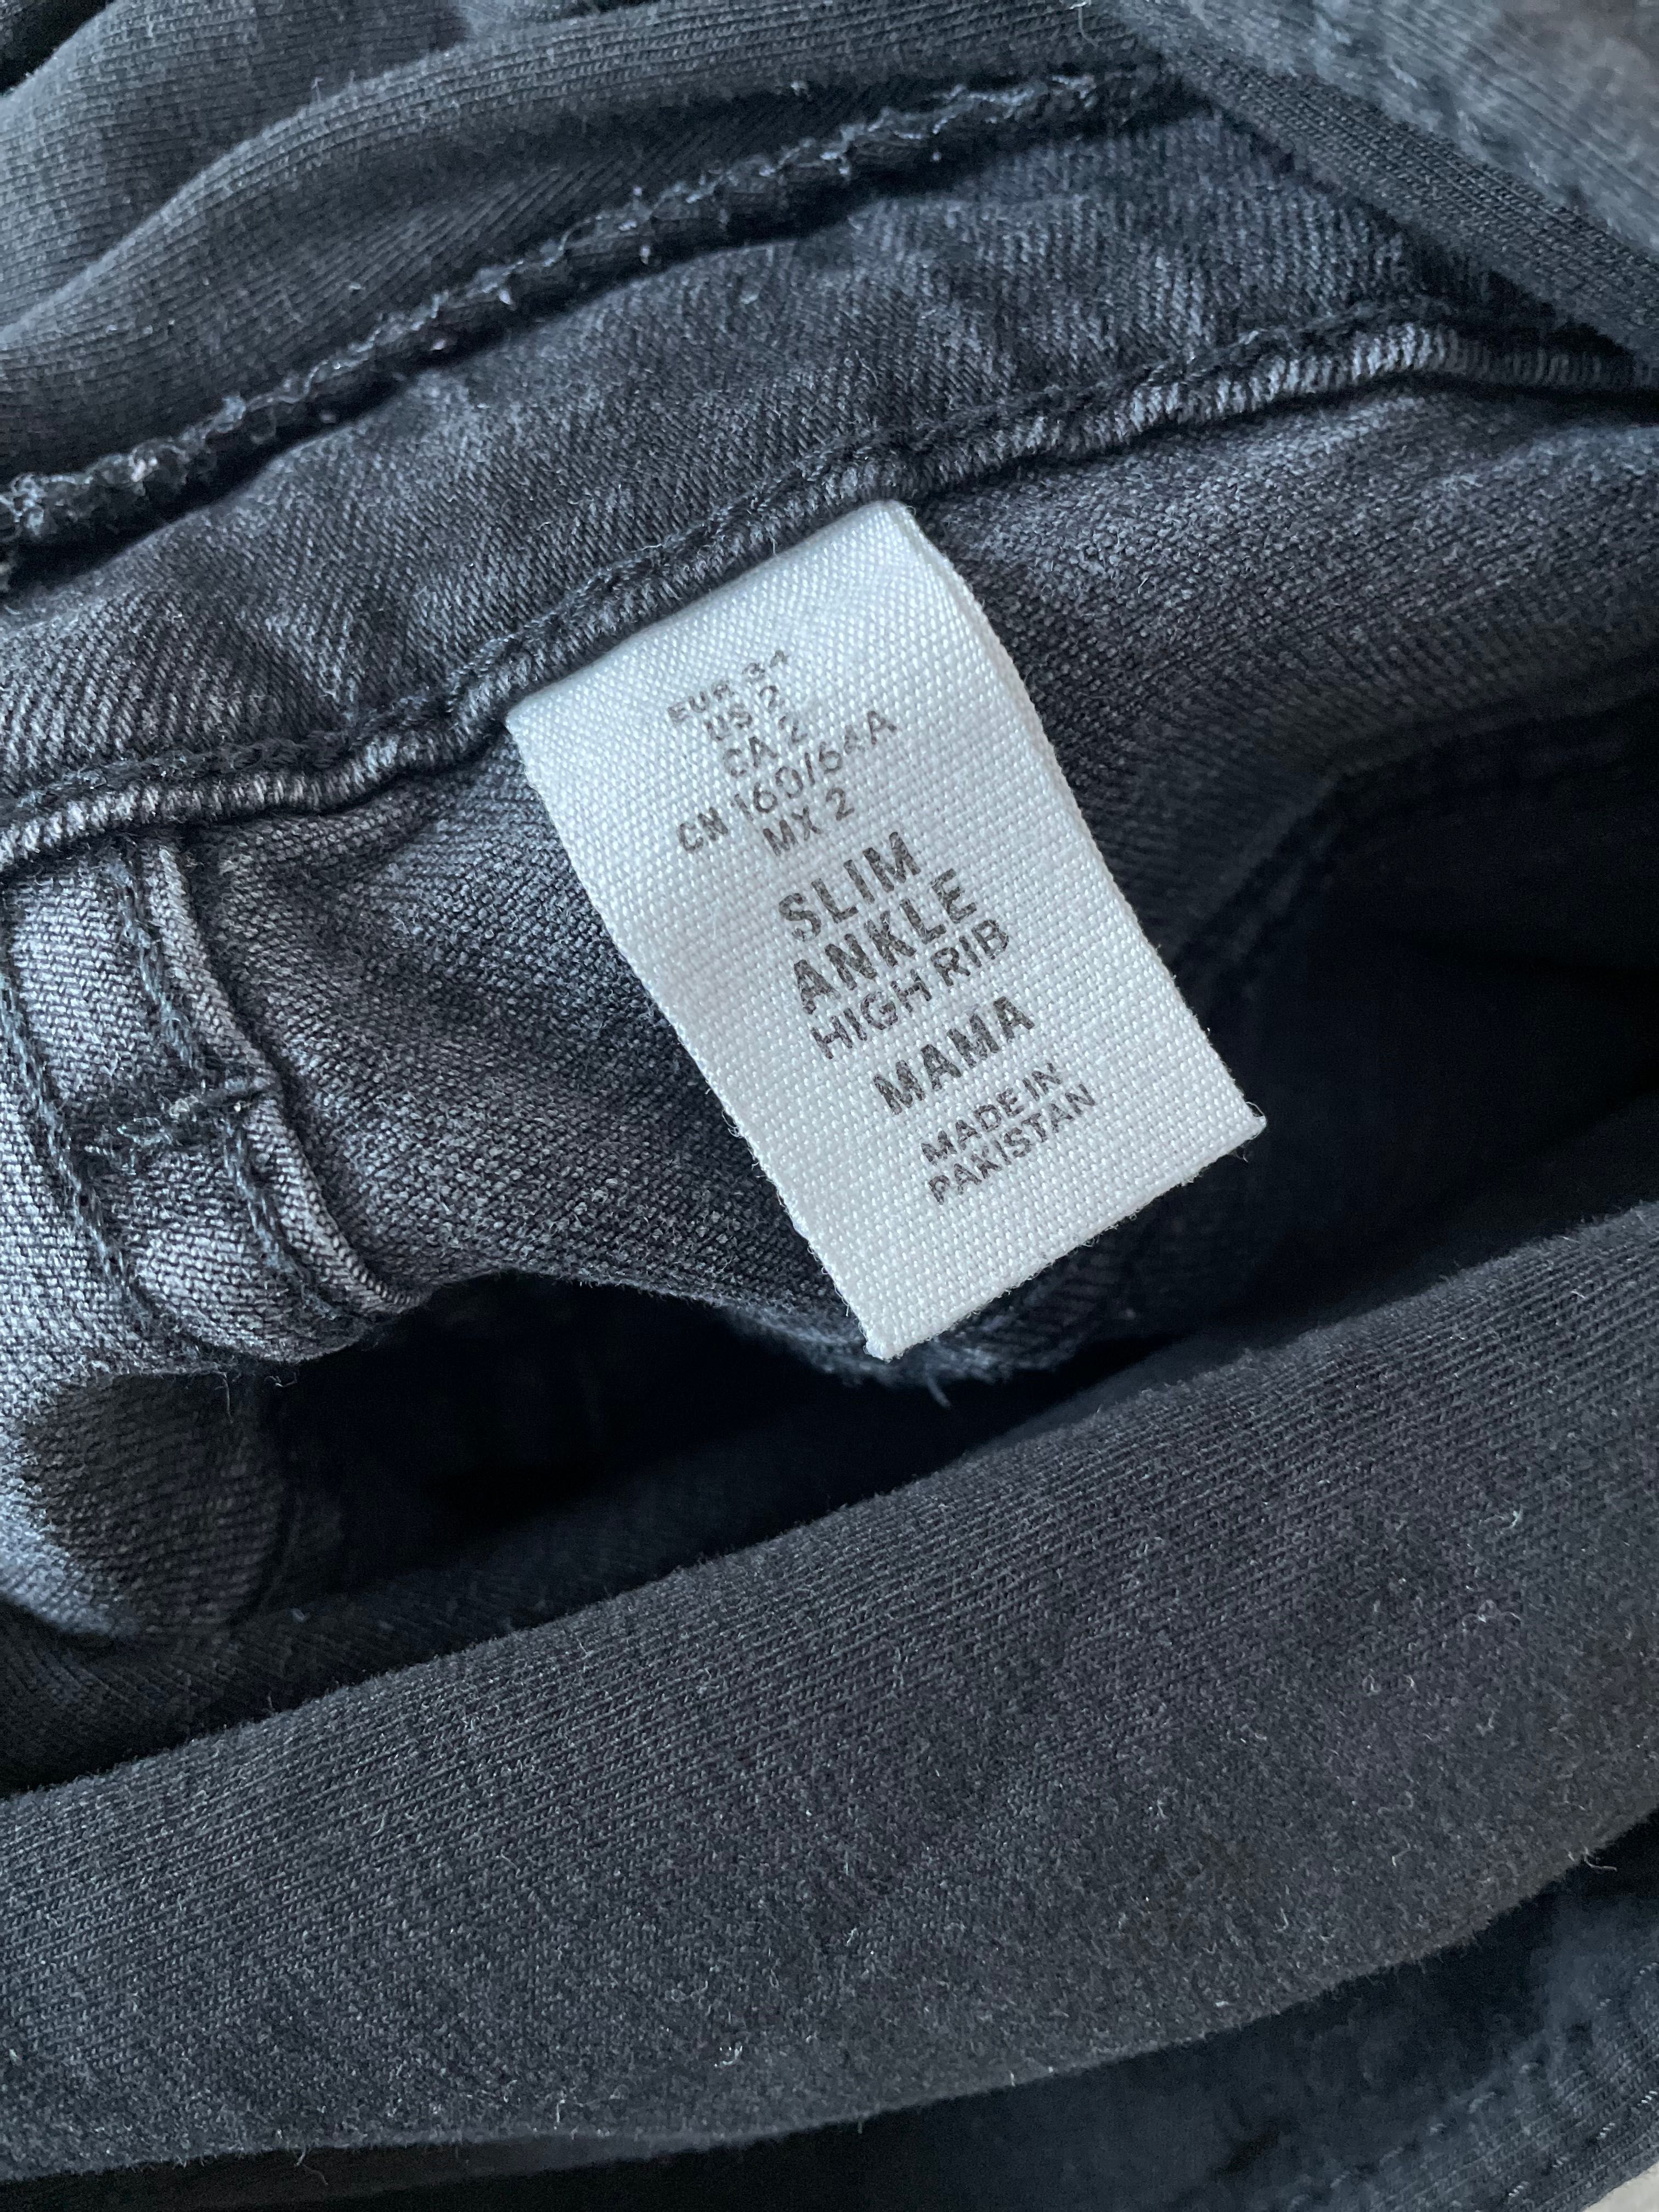 Czarne jeansy ciążowe - H&M